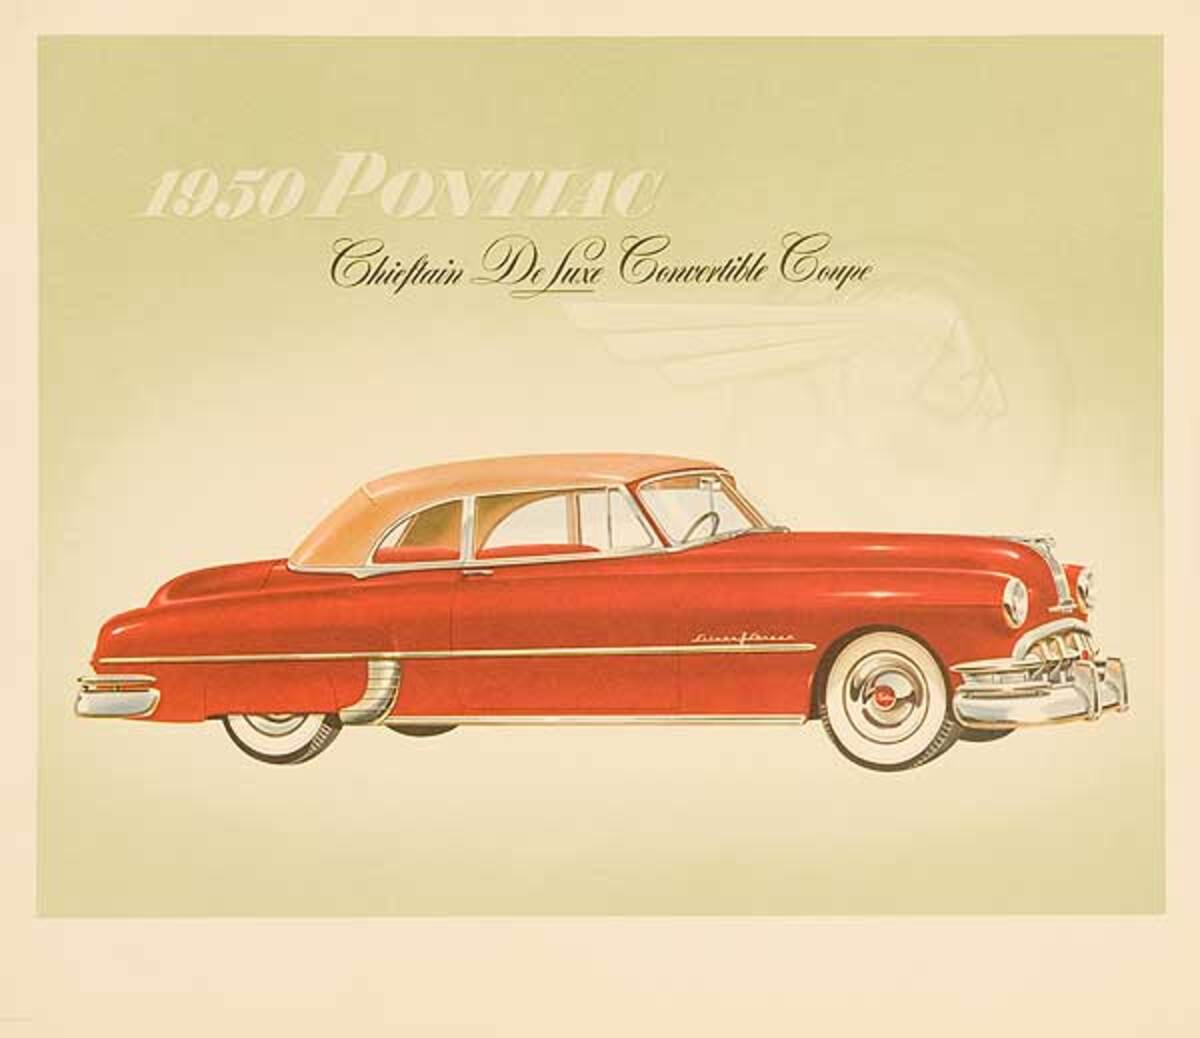 1950 Pontiac Chieftan Deluxe Convertible Coupe Original Showroom Advertising Poster